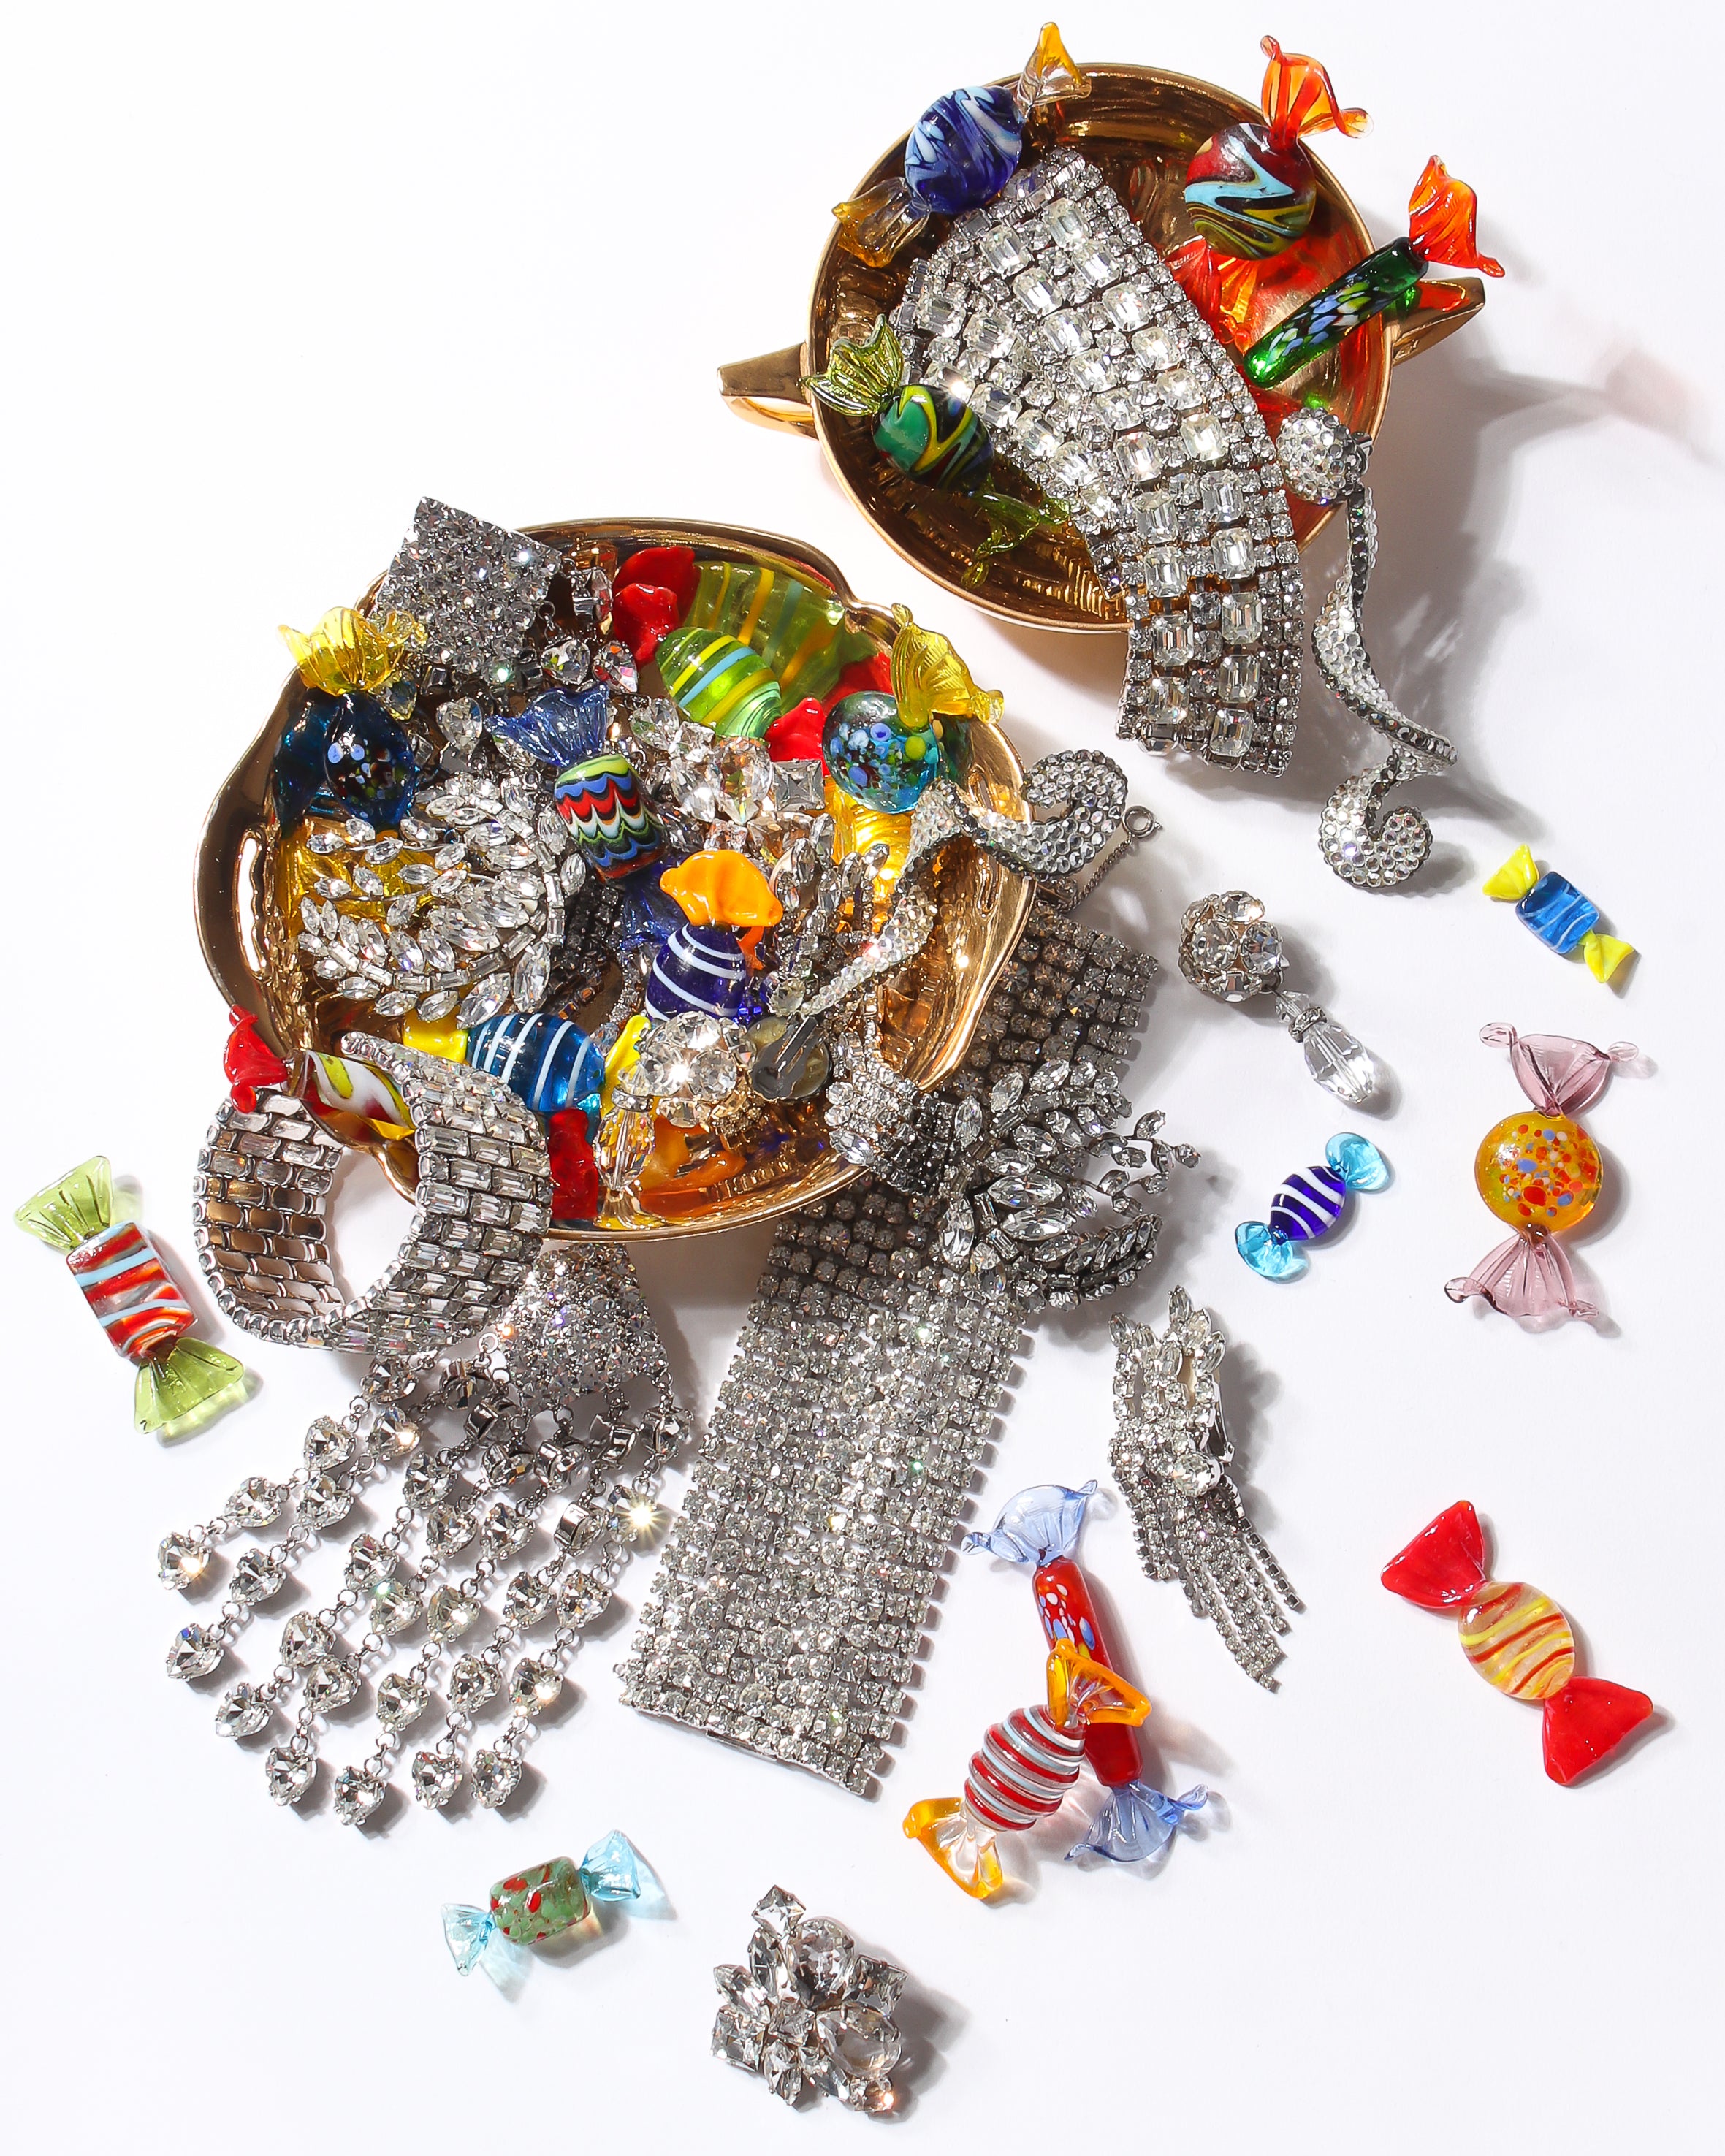 Recess Dresscode Los Angeles Vintage Hard Candy Silver Jewelry Rhinestones Crystal 